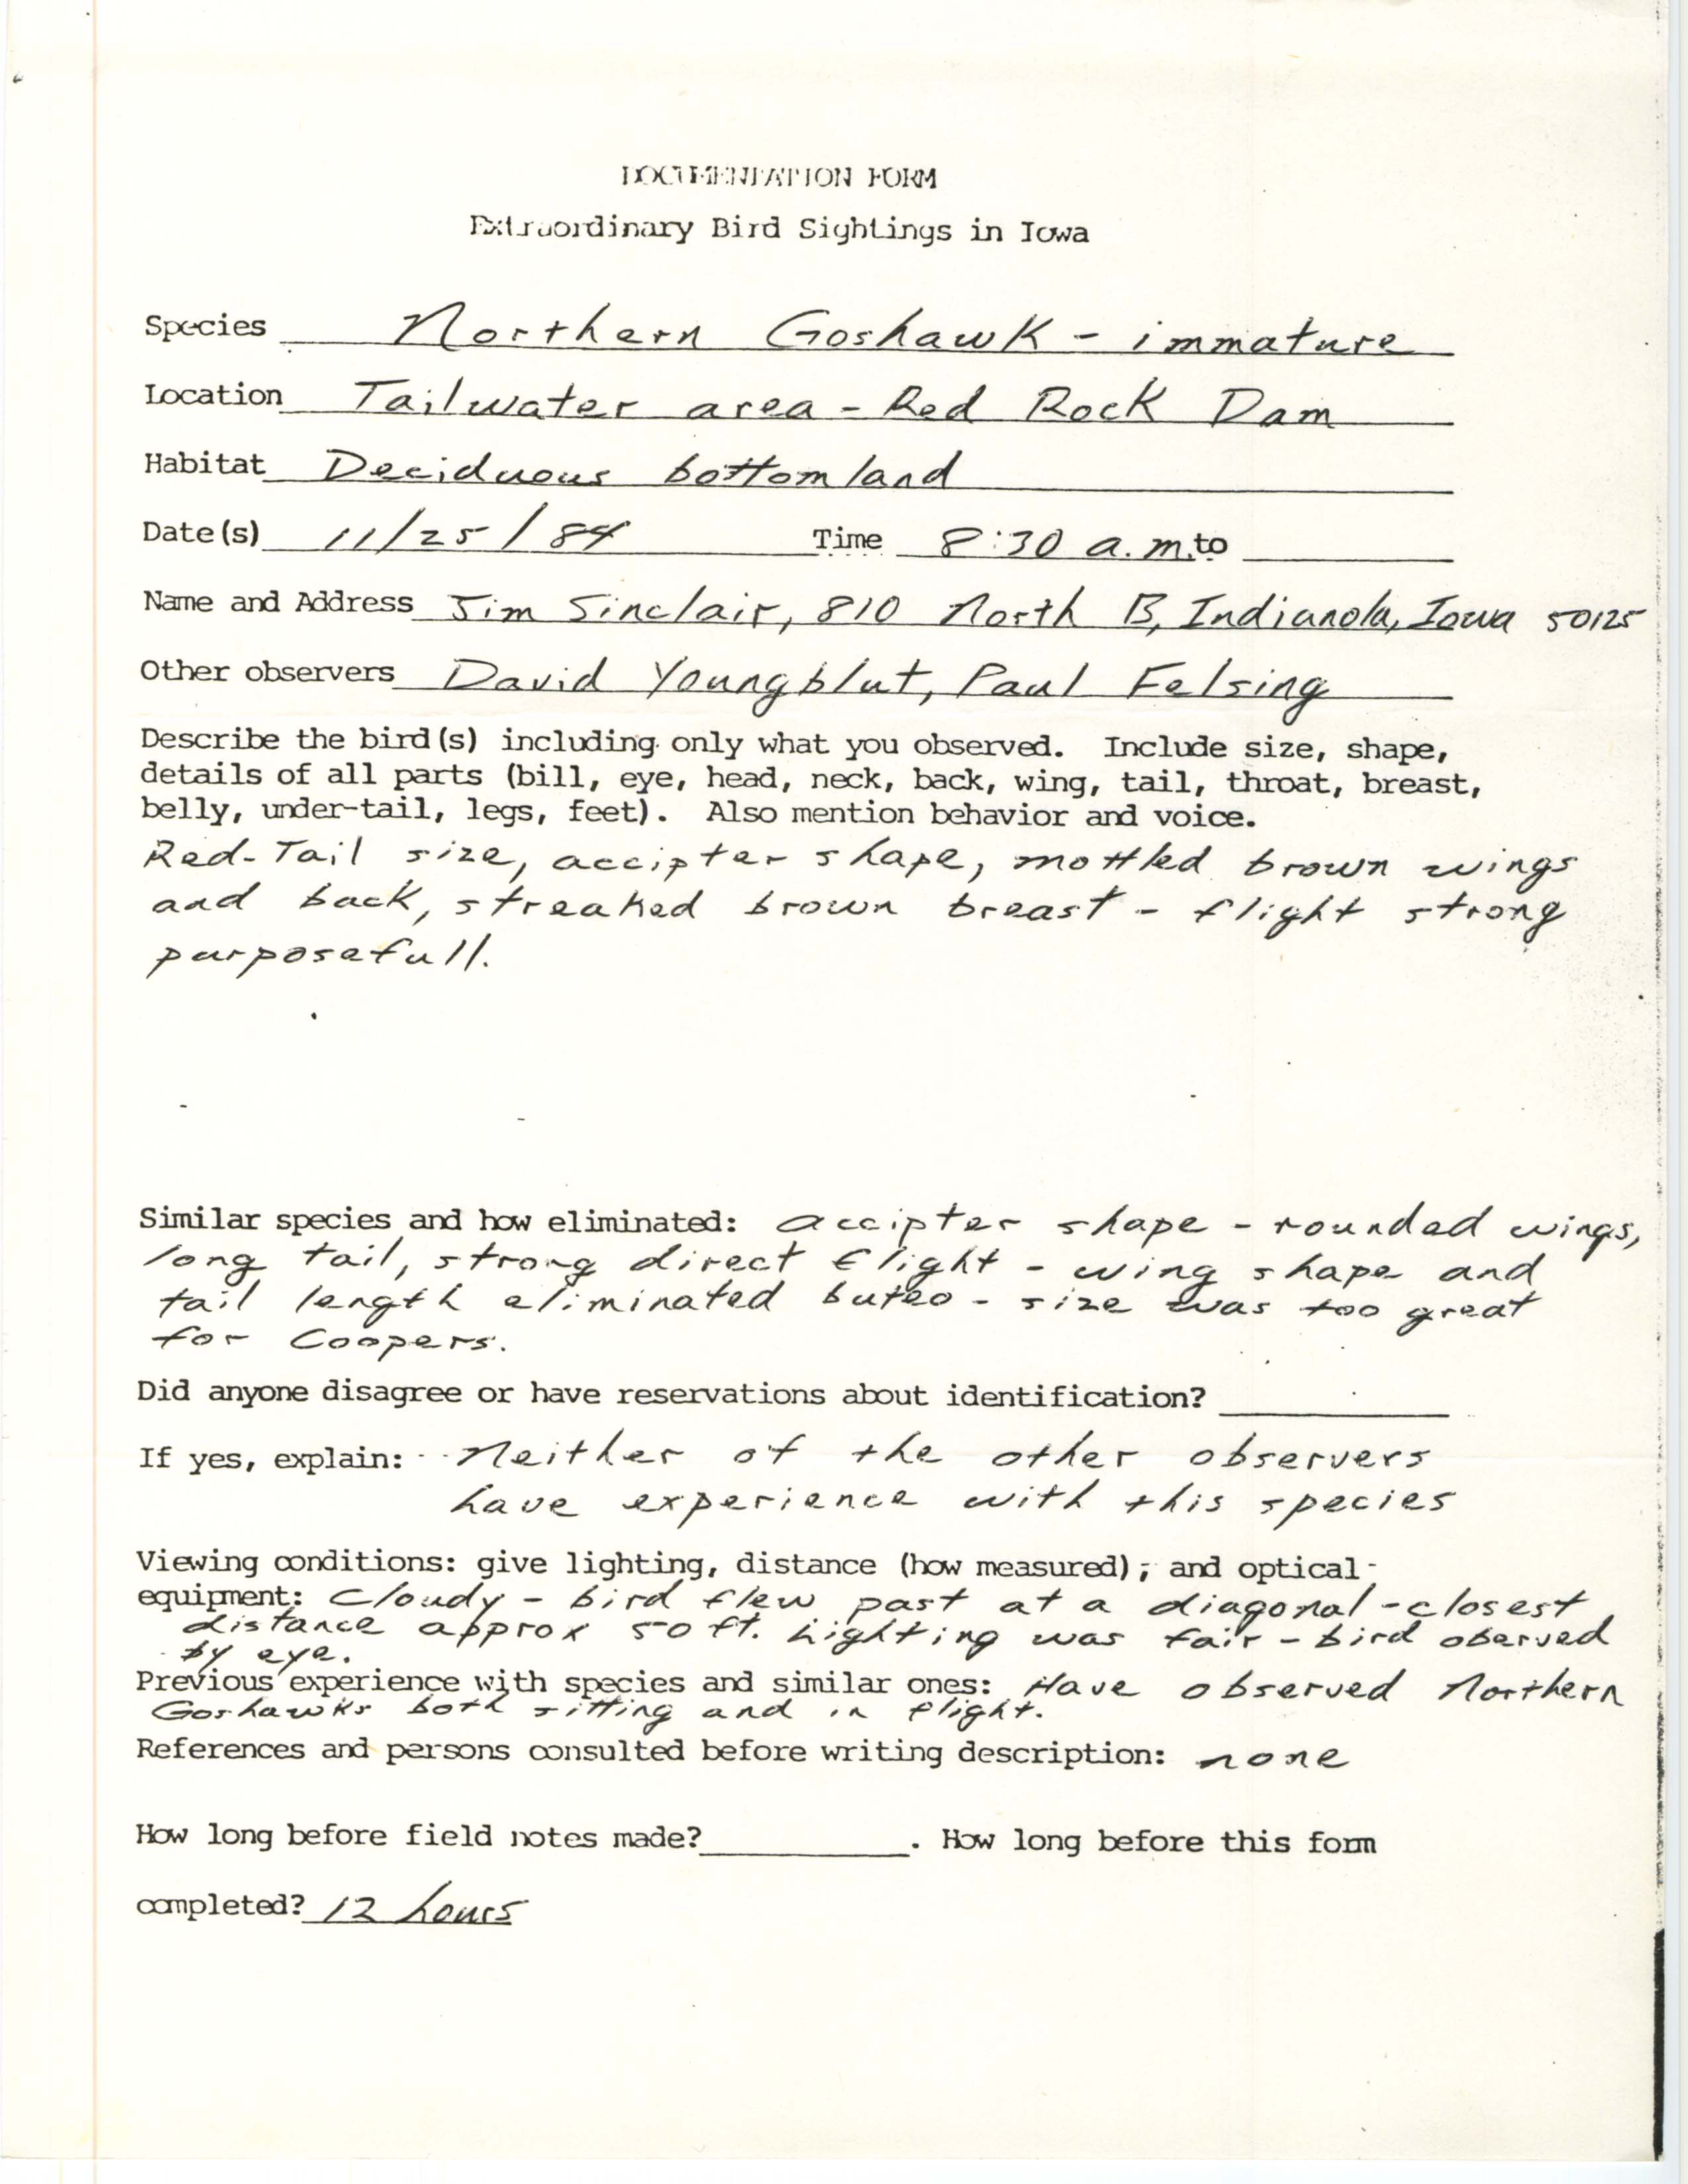 Rare bird documentation form for Northern Goshawk at Red Rock Dam, 1984